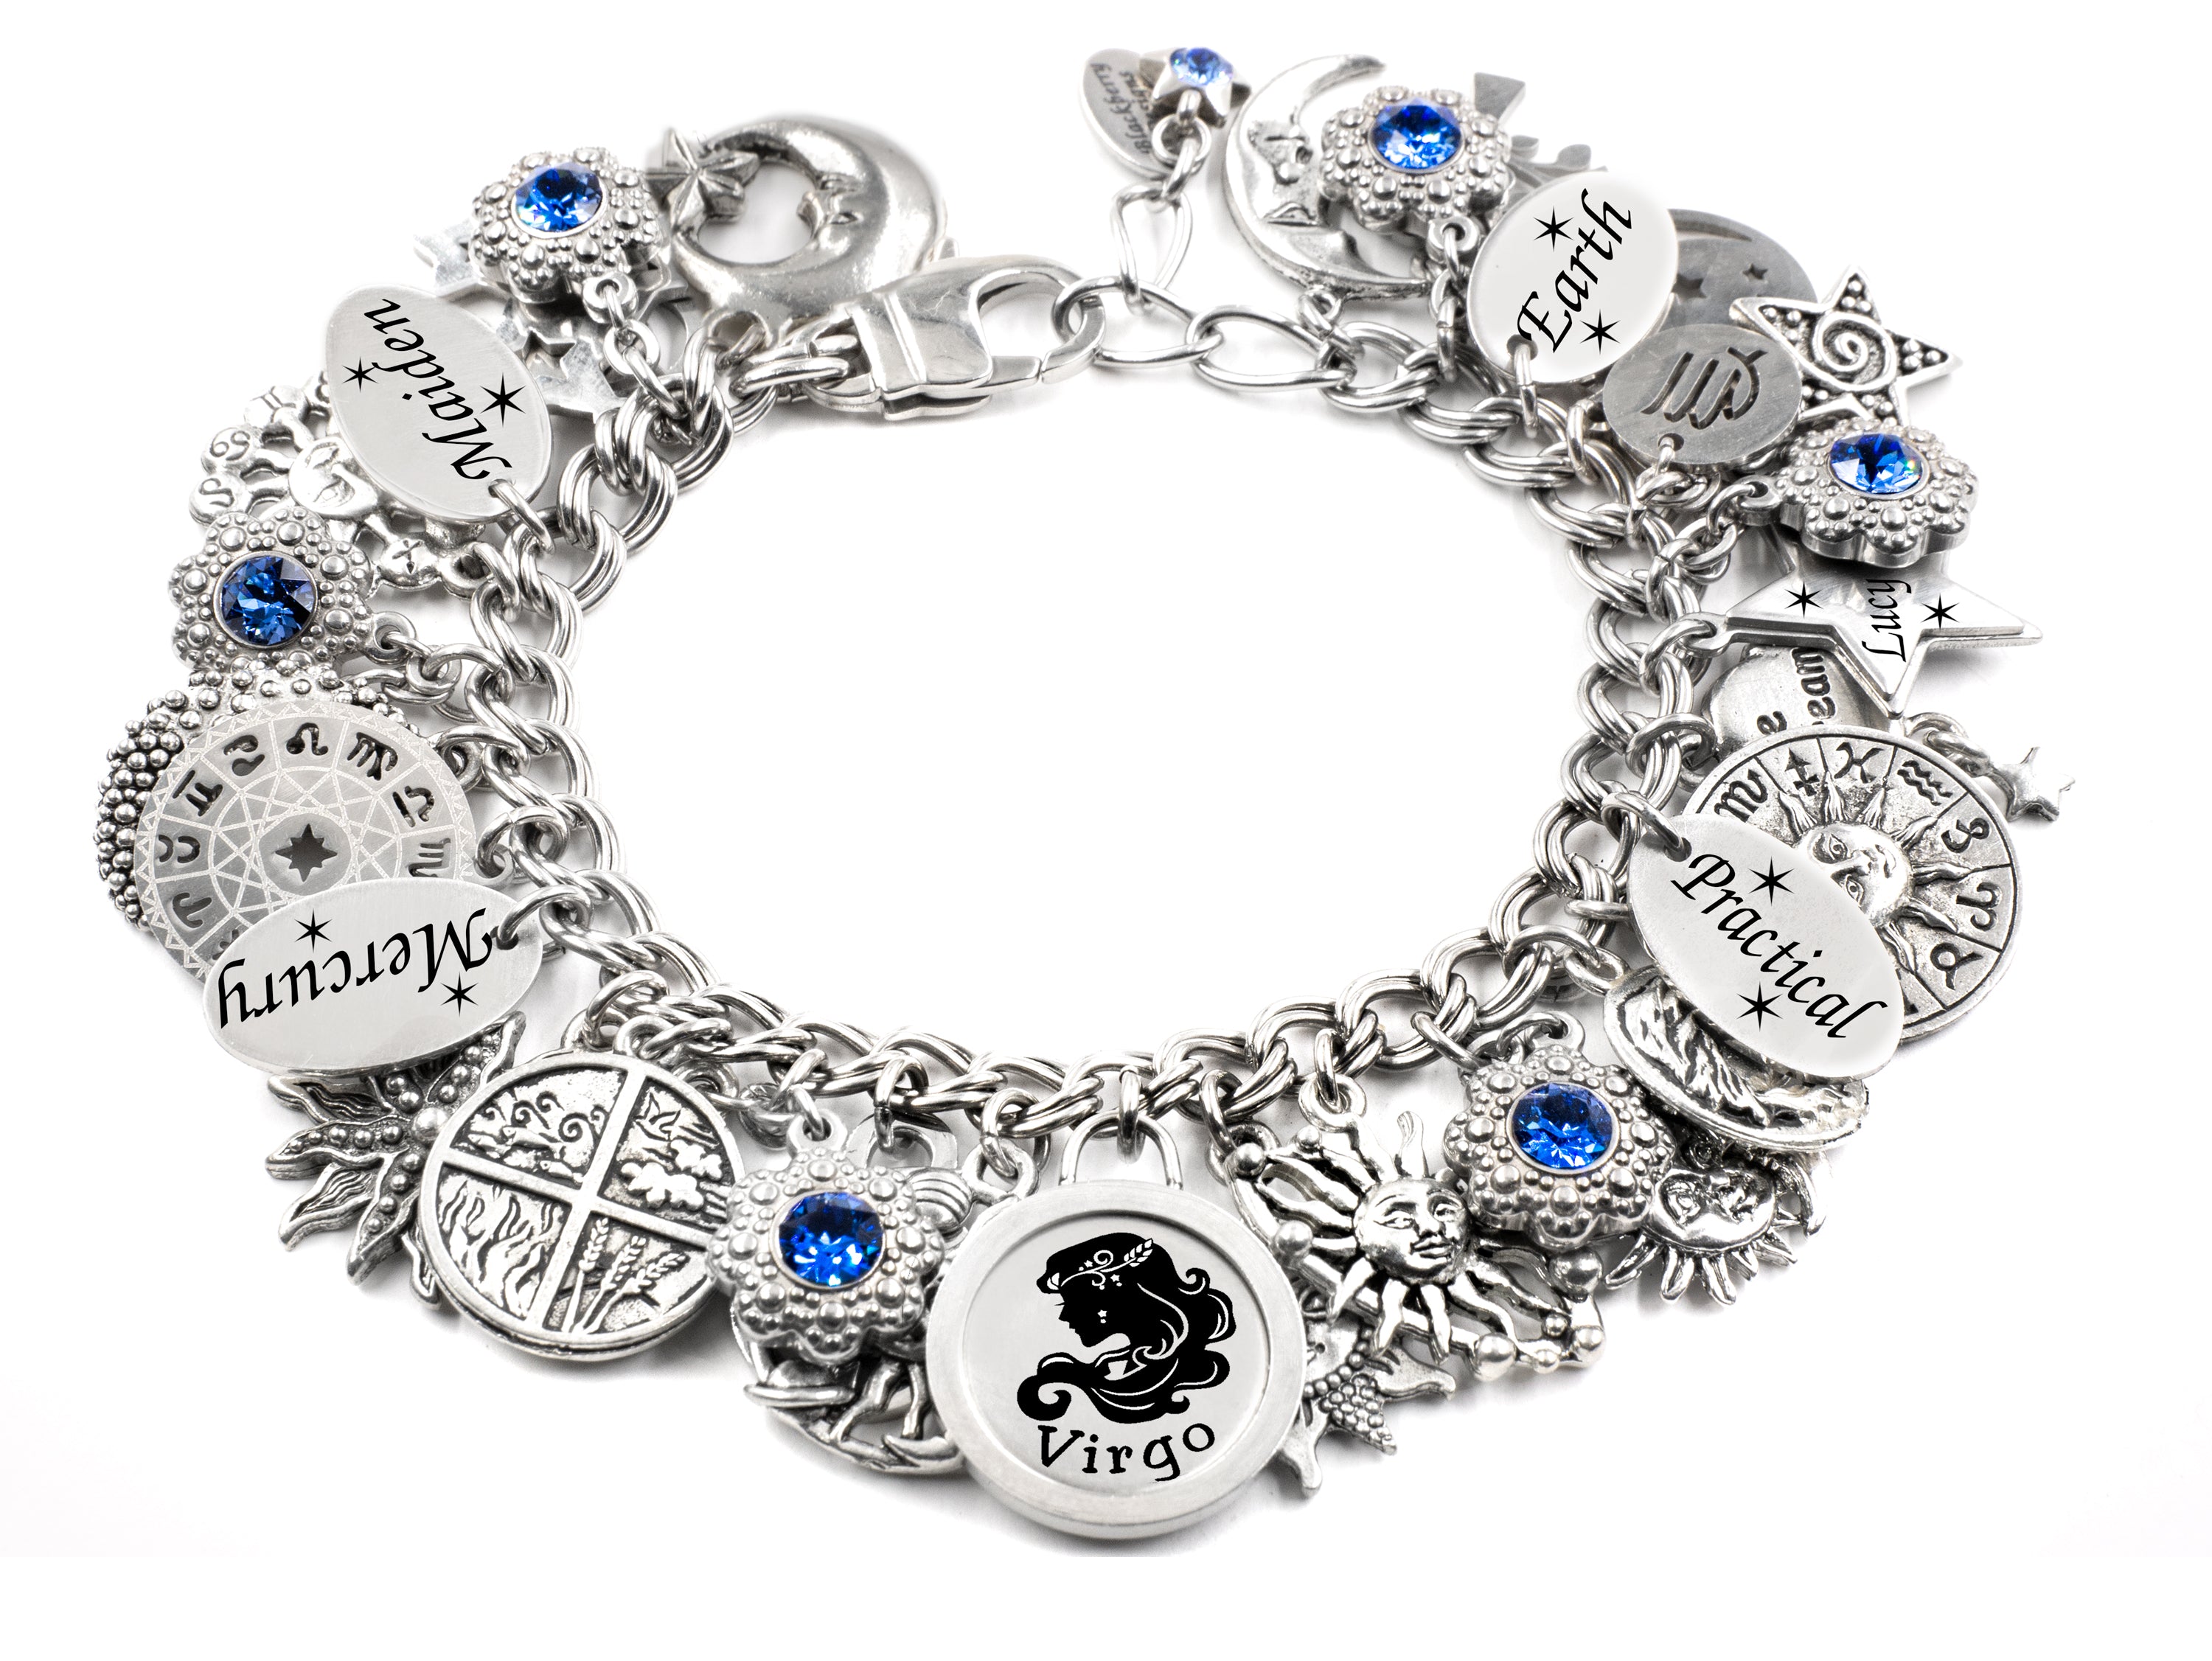 Virgo Bracelet Virgo Charm Bracelet Zodiac Bracelet Sun  Etsy  Charm  bracelet Zodiac bracelet Handmade charm bracelets